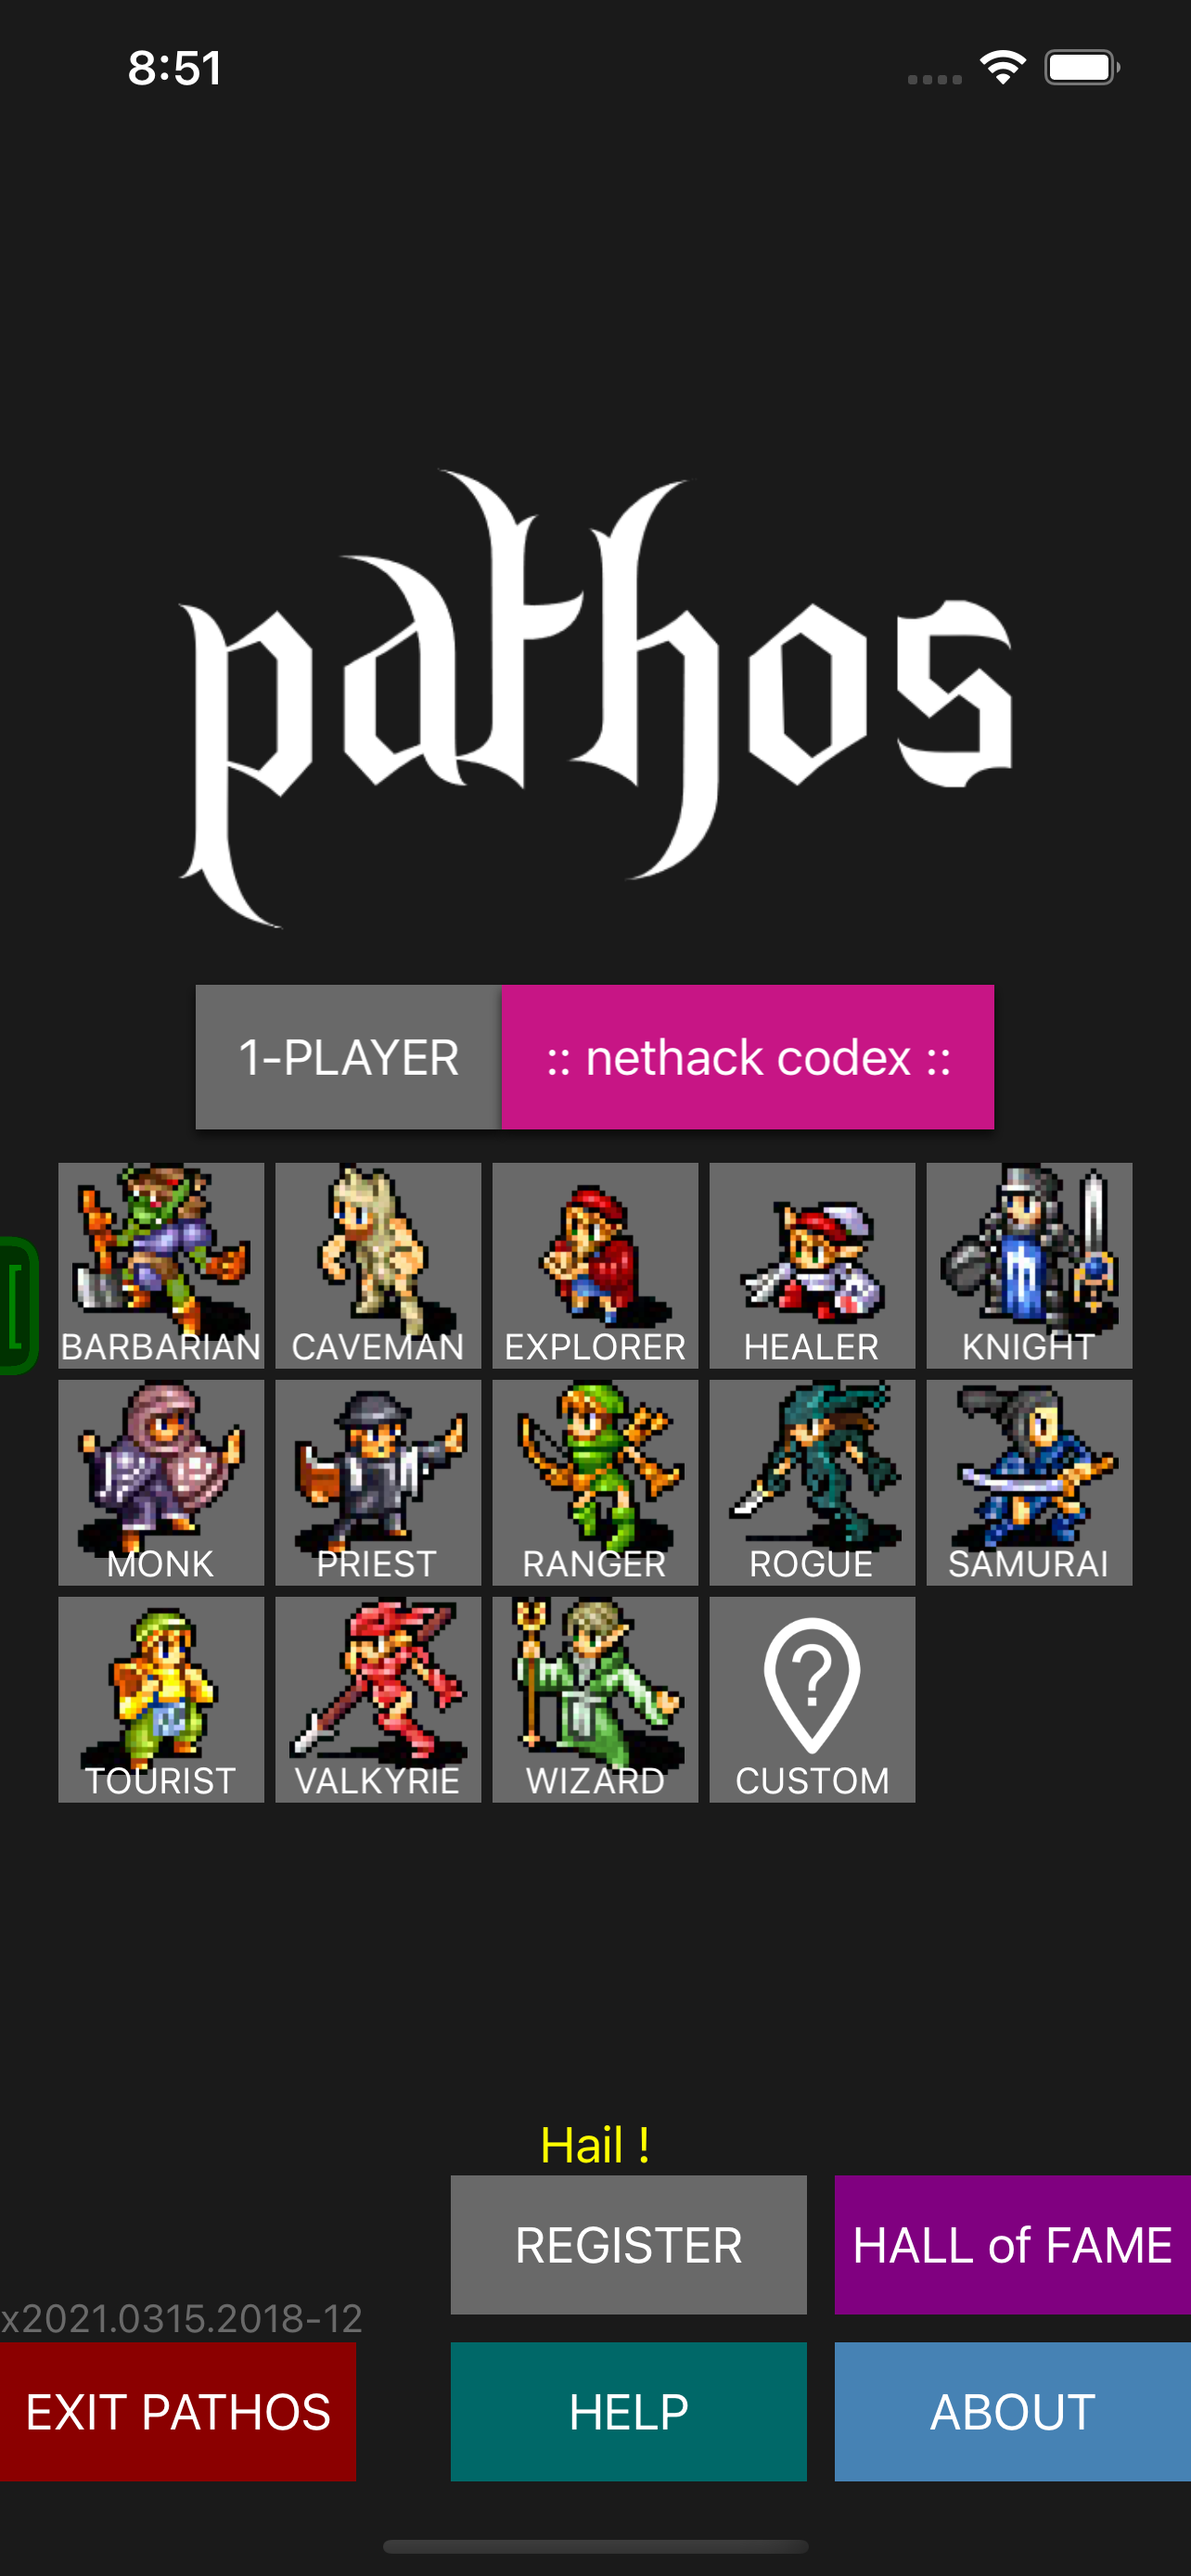 Screenshot 1 of Patos: Nethack Codex 7.2